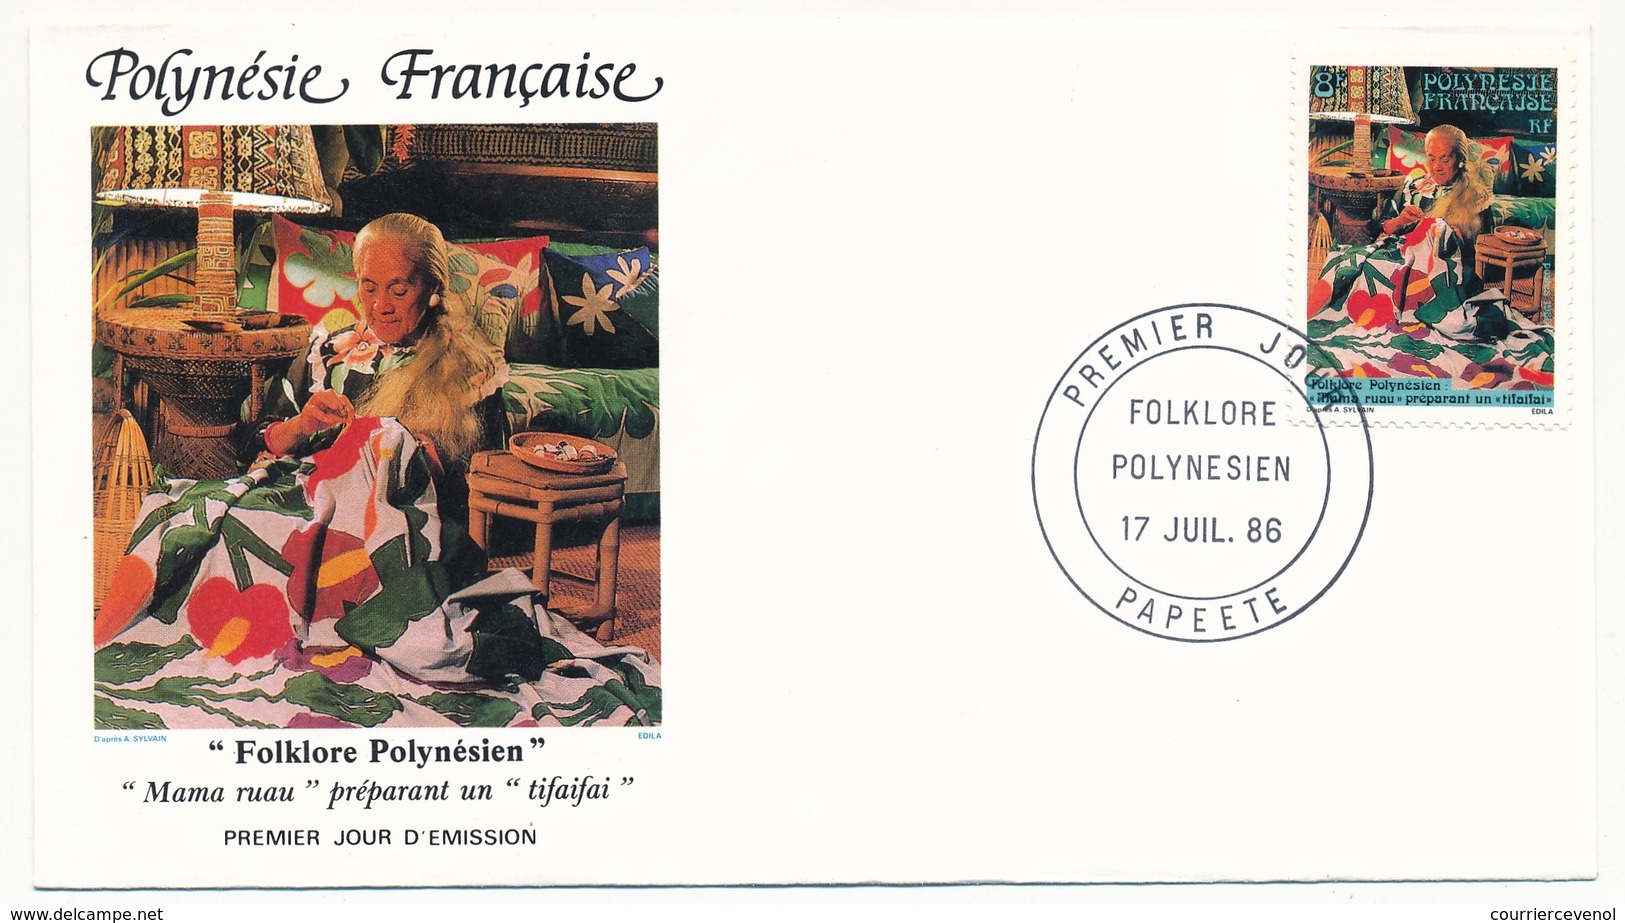 POLYNESIE FRANCAISE - 3 FDC - Folklore Polynésien - 17 Juillet 1986 - Papeete - FDC